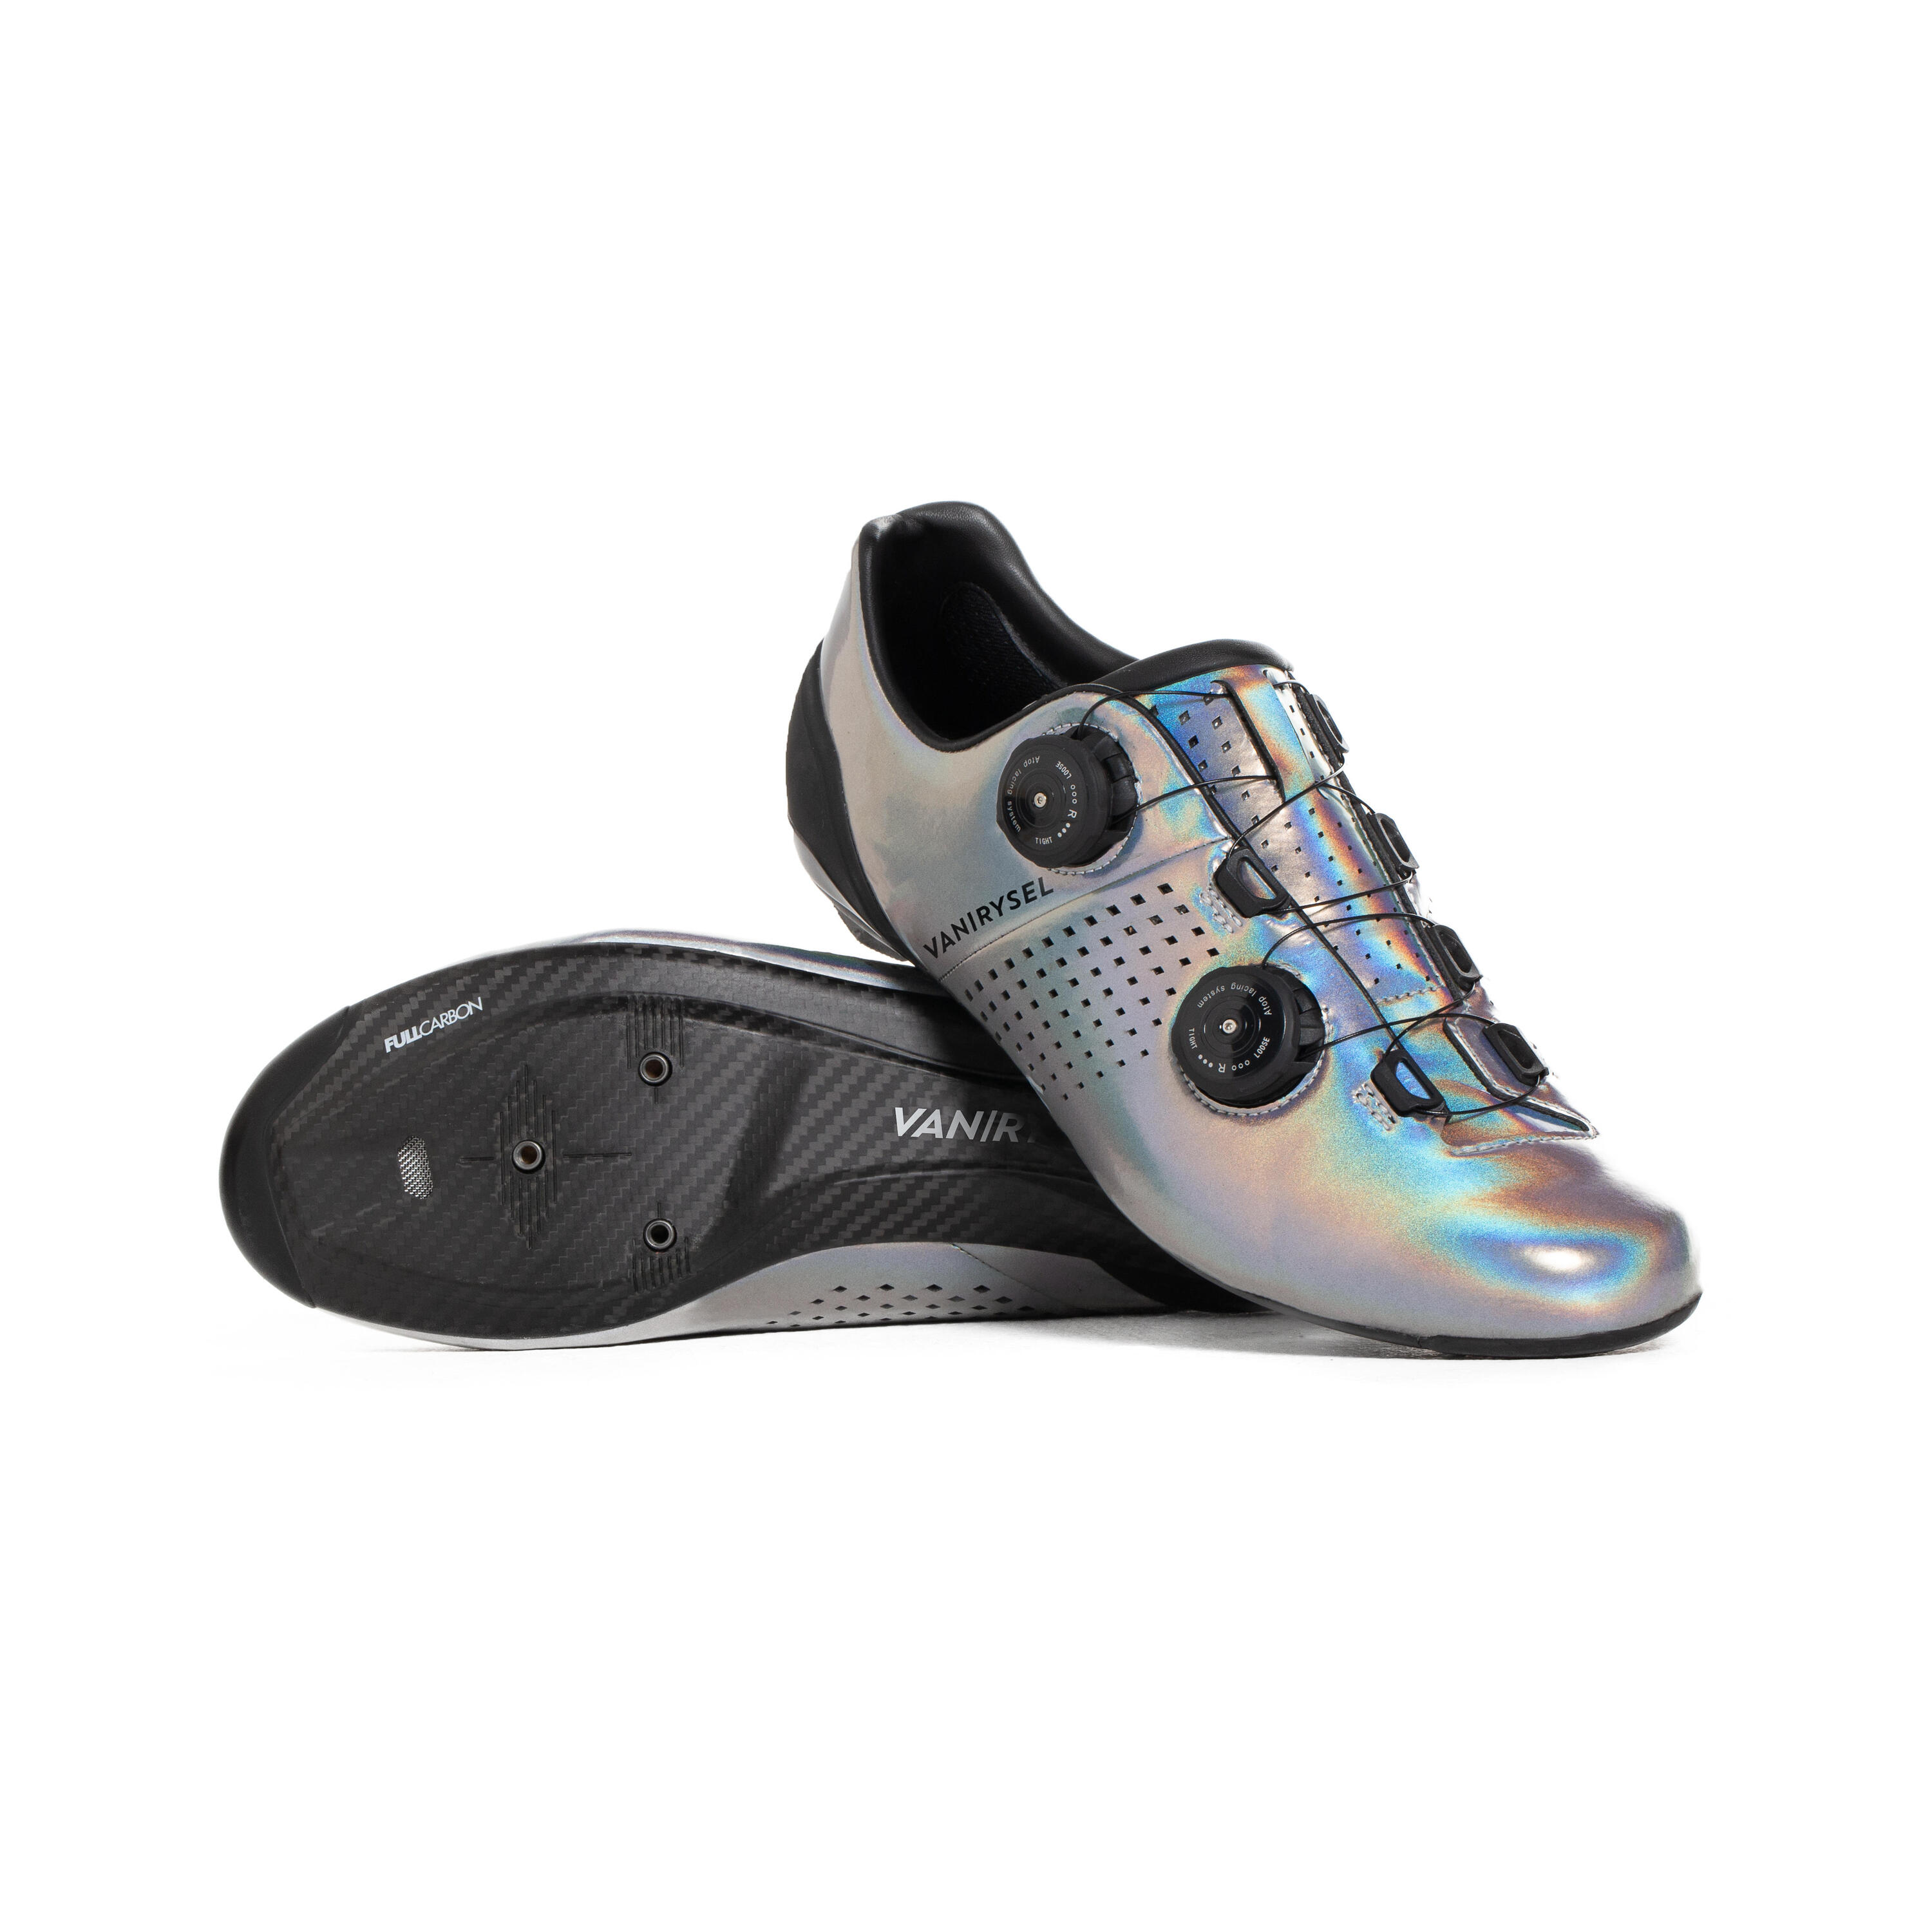 Van Rysel Sport Cycling Shoes - Iridescent Grey 4/9